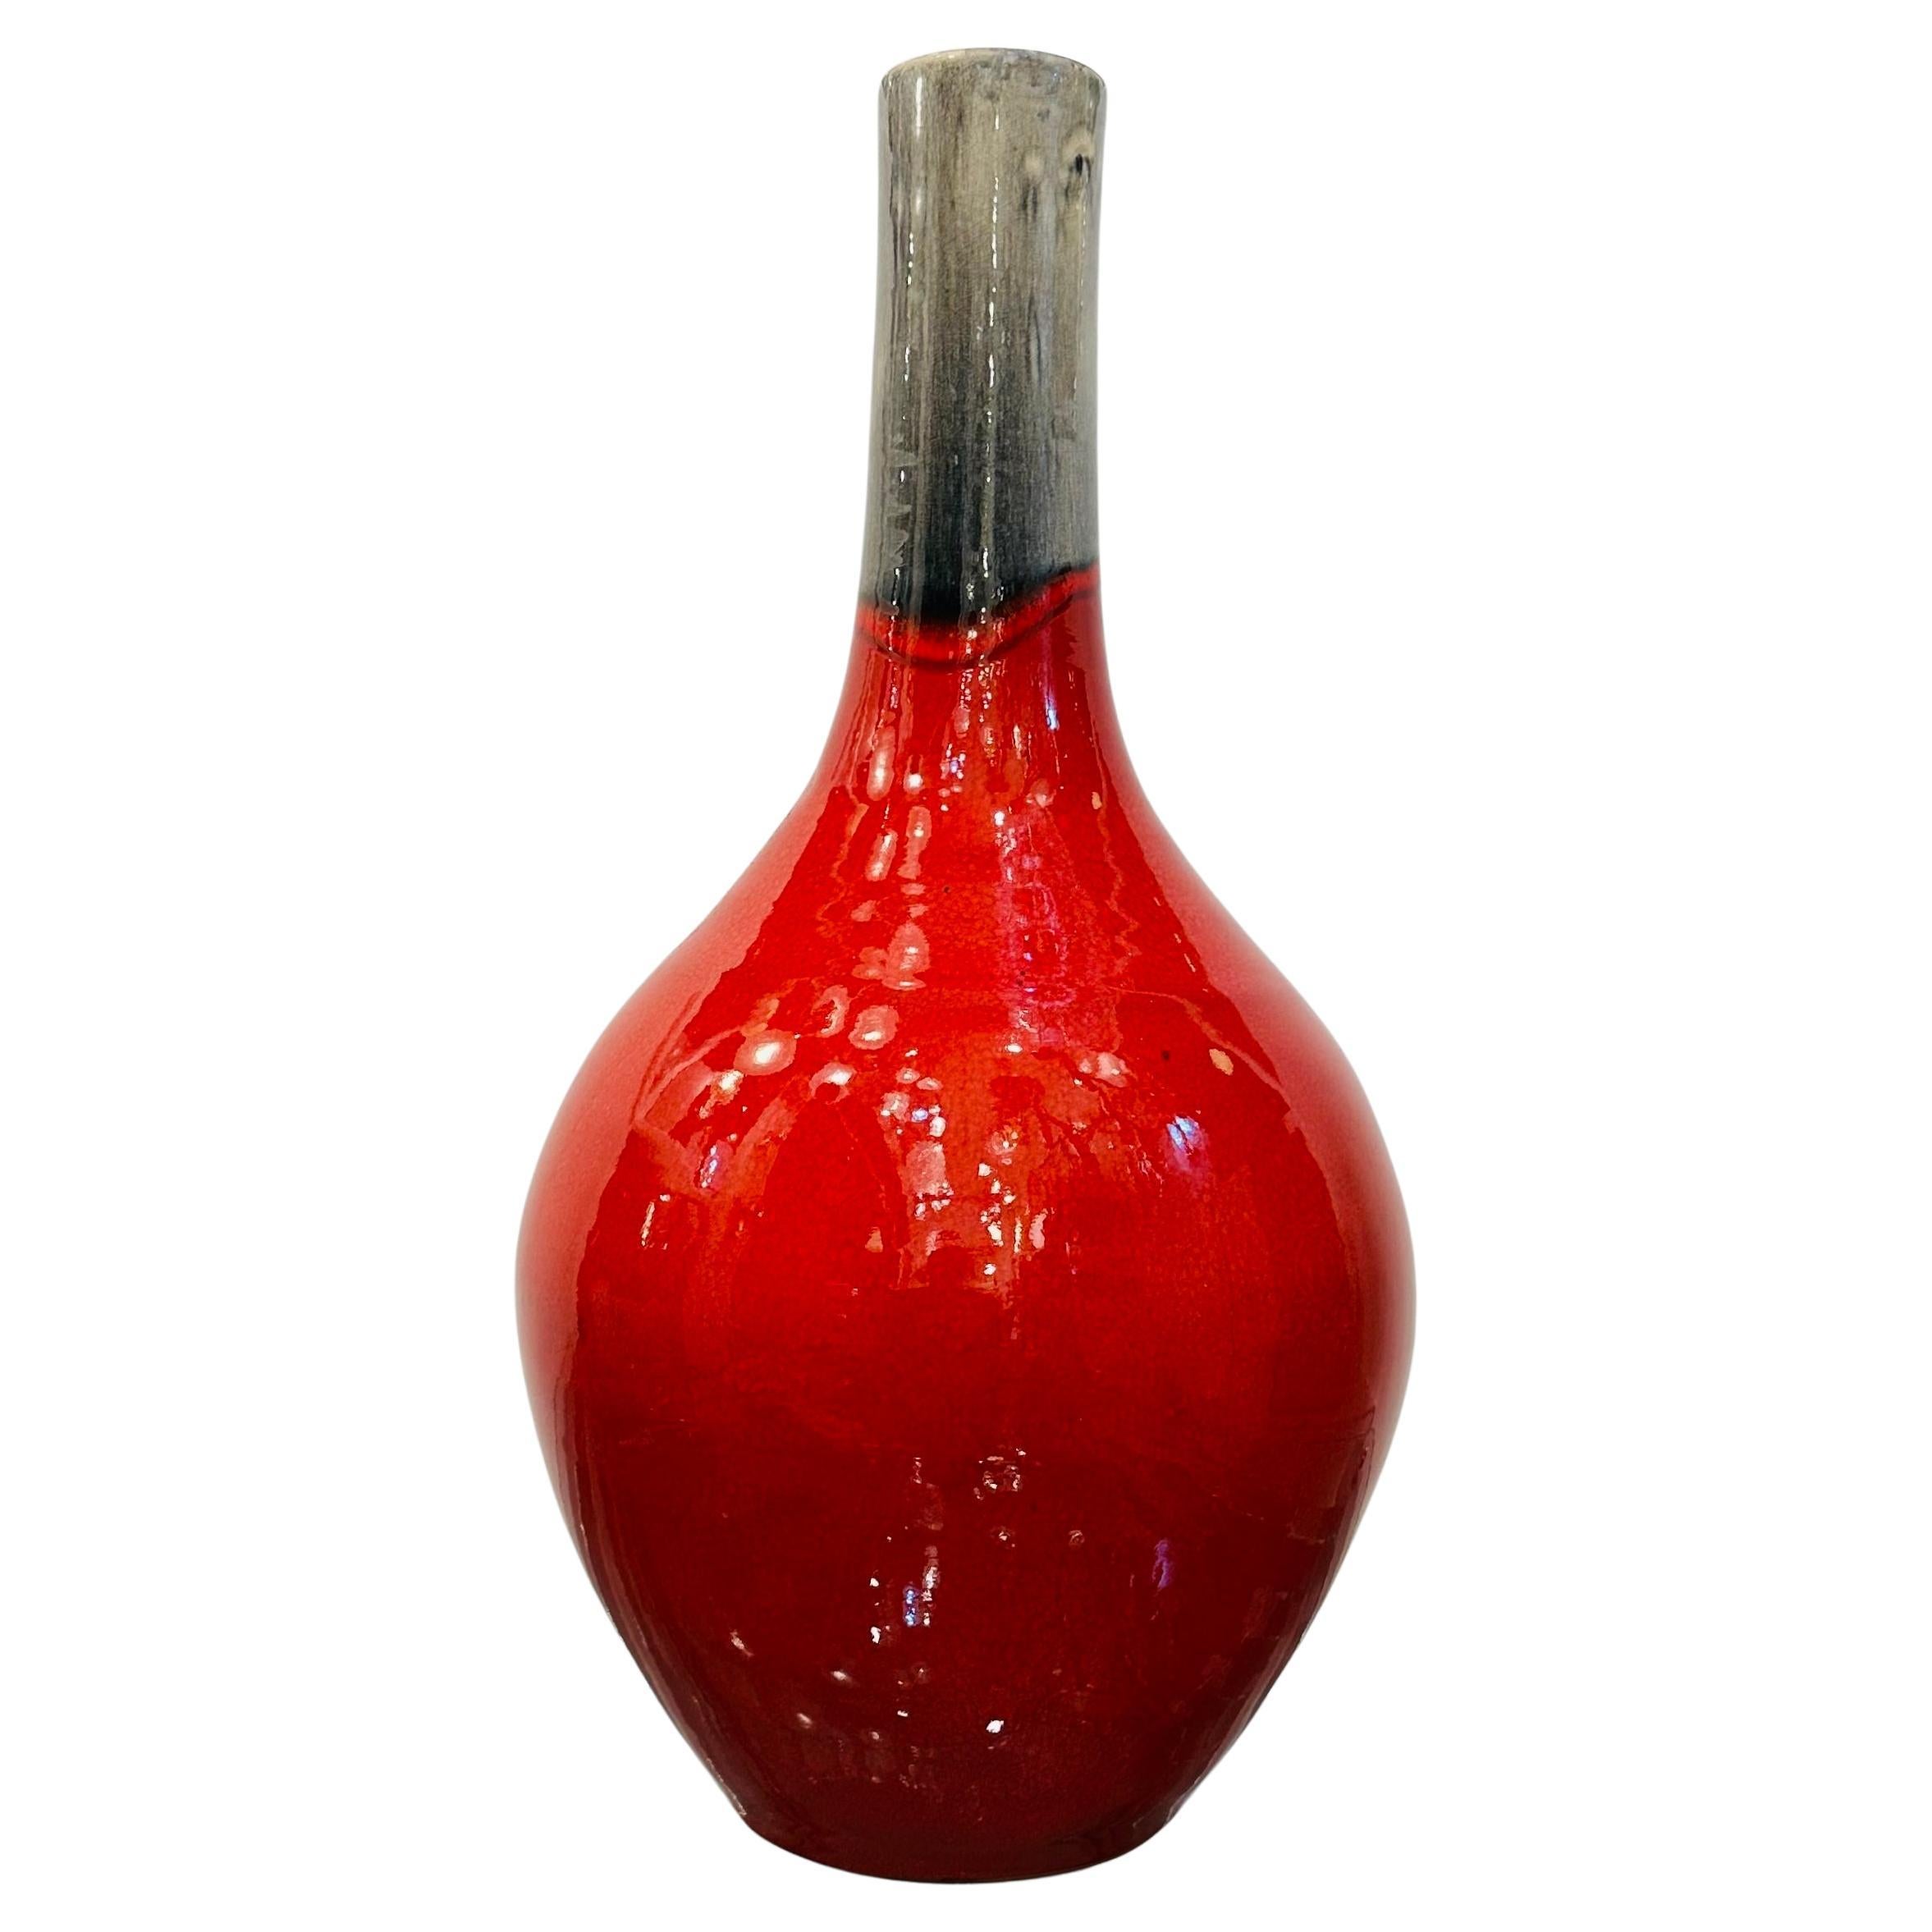 1970s Vintage Italian Mottled Red & Grey Molten Ceramic Highly Glazed Vase